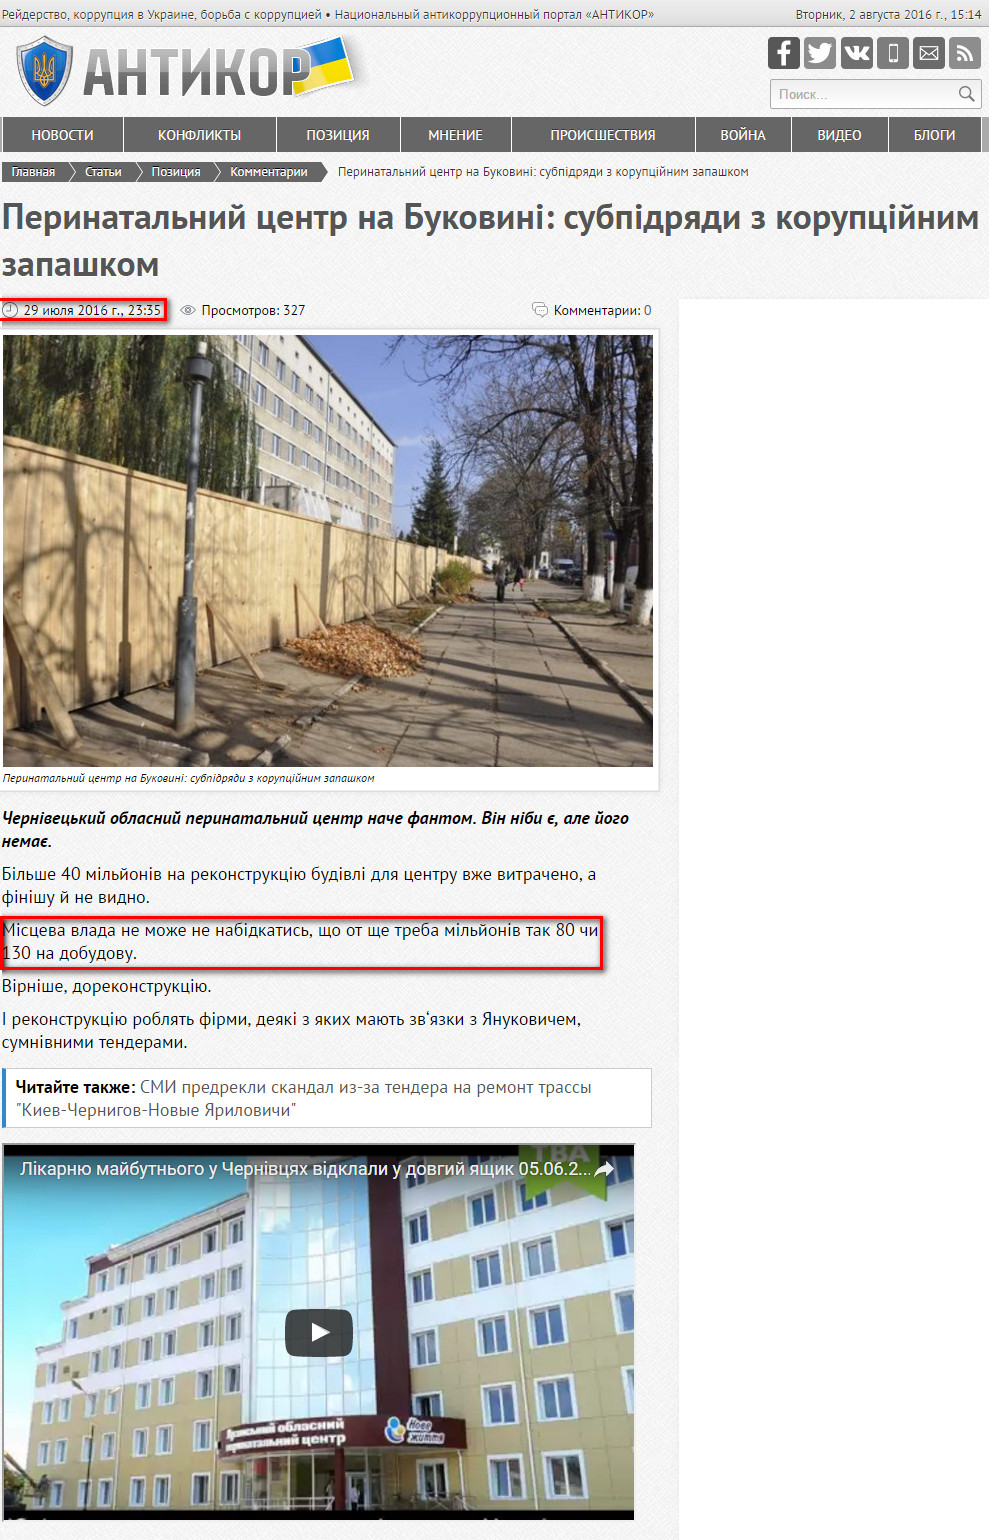 http://antikor.com.ua/articles/116033-perinataljnij_tsentr_na_bukovini_subpidrjadi_z_koruptsijnim_zapashkom